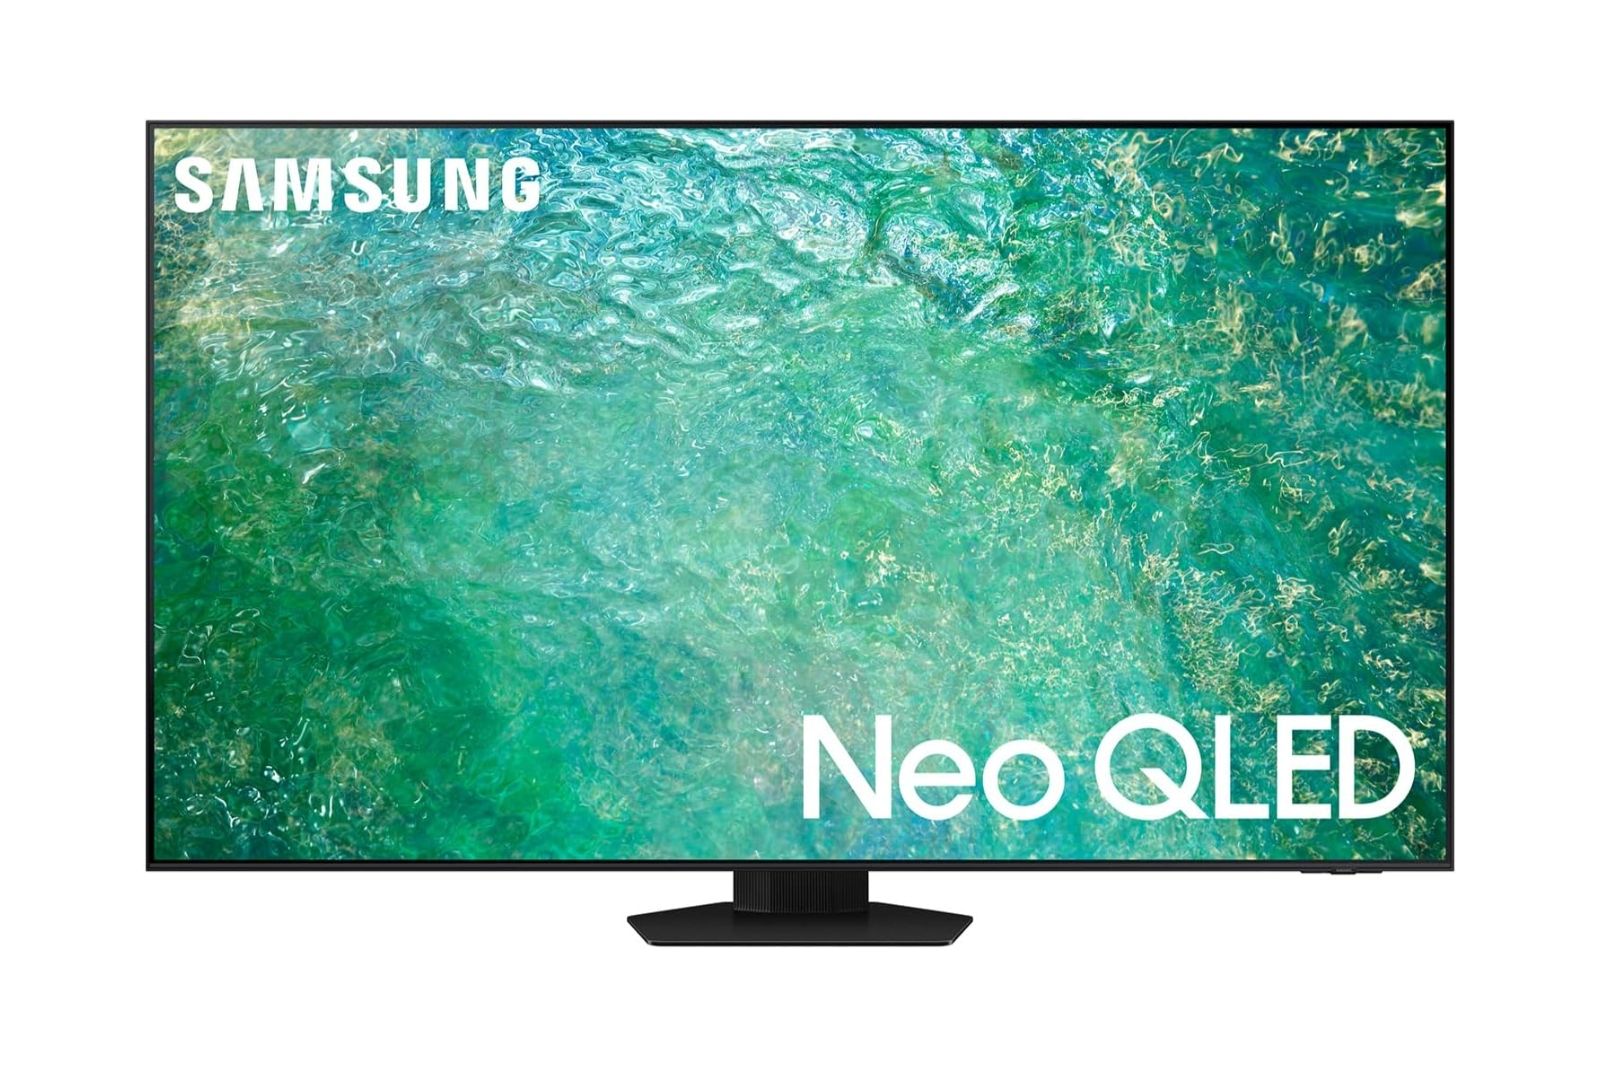 A flatscreen Samsung TV on a white background.